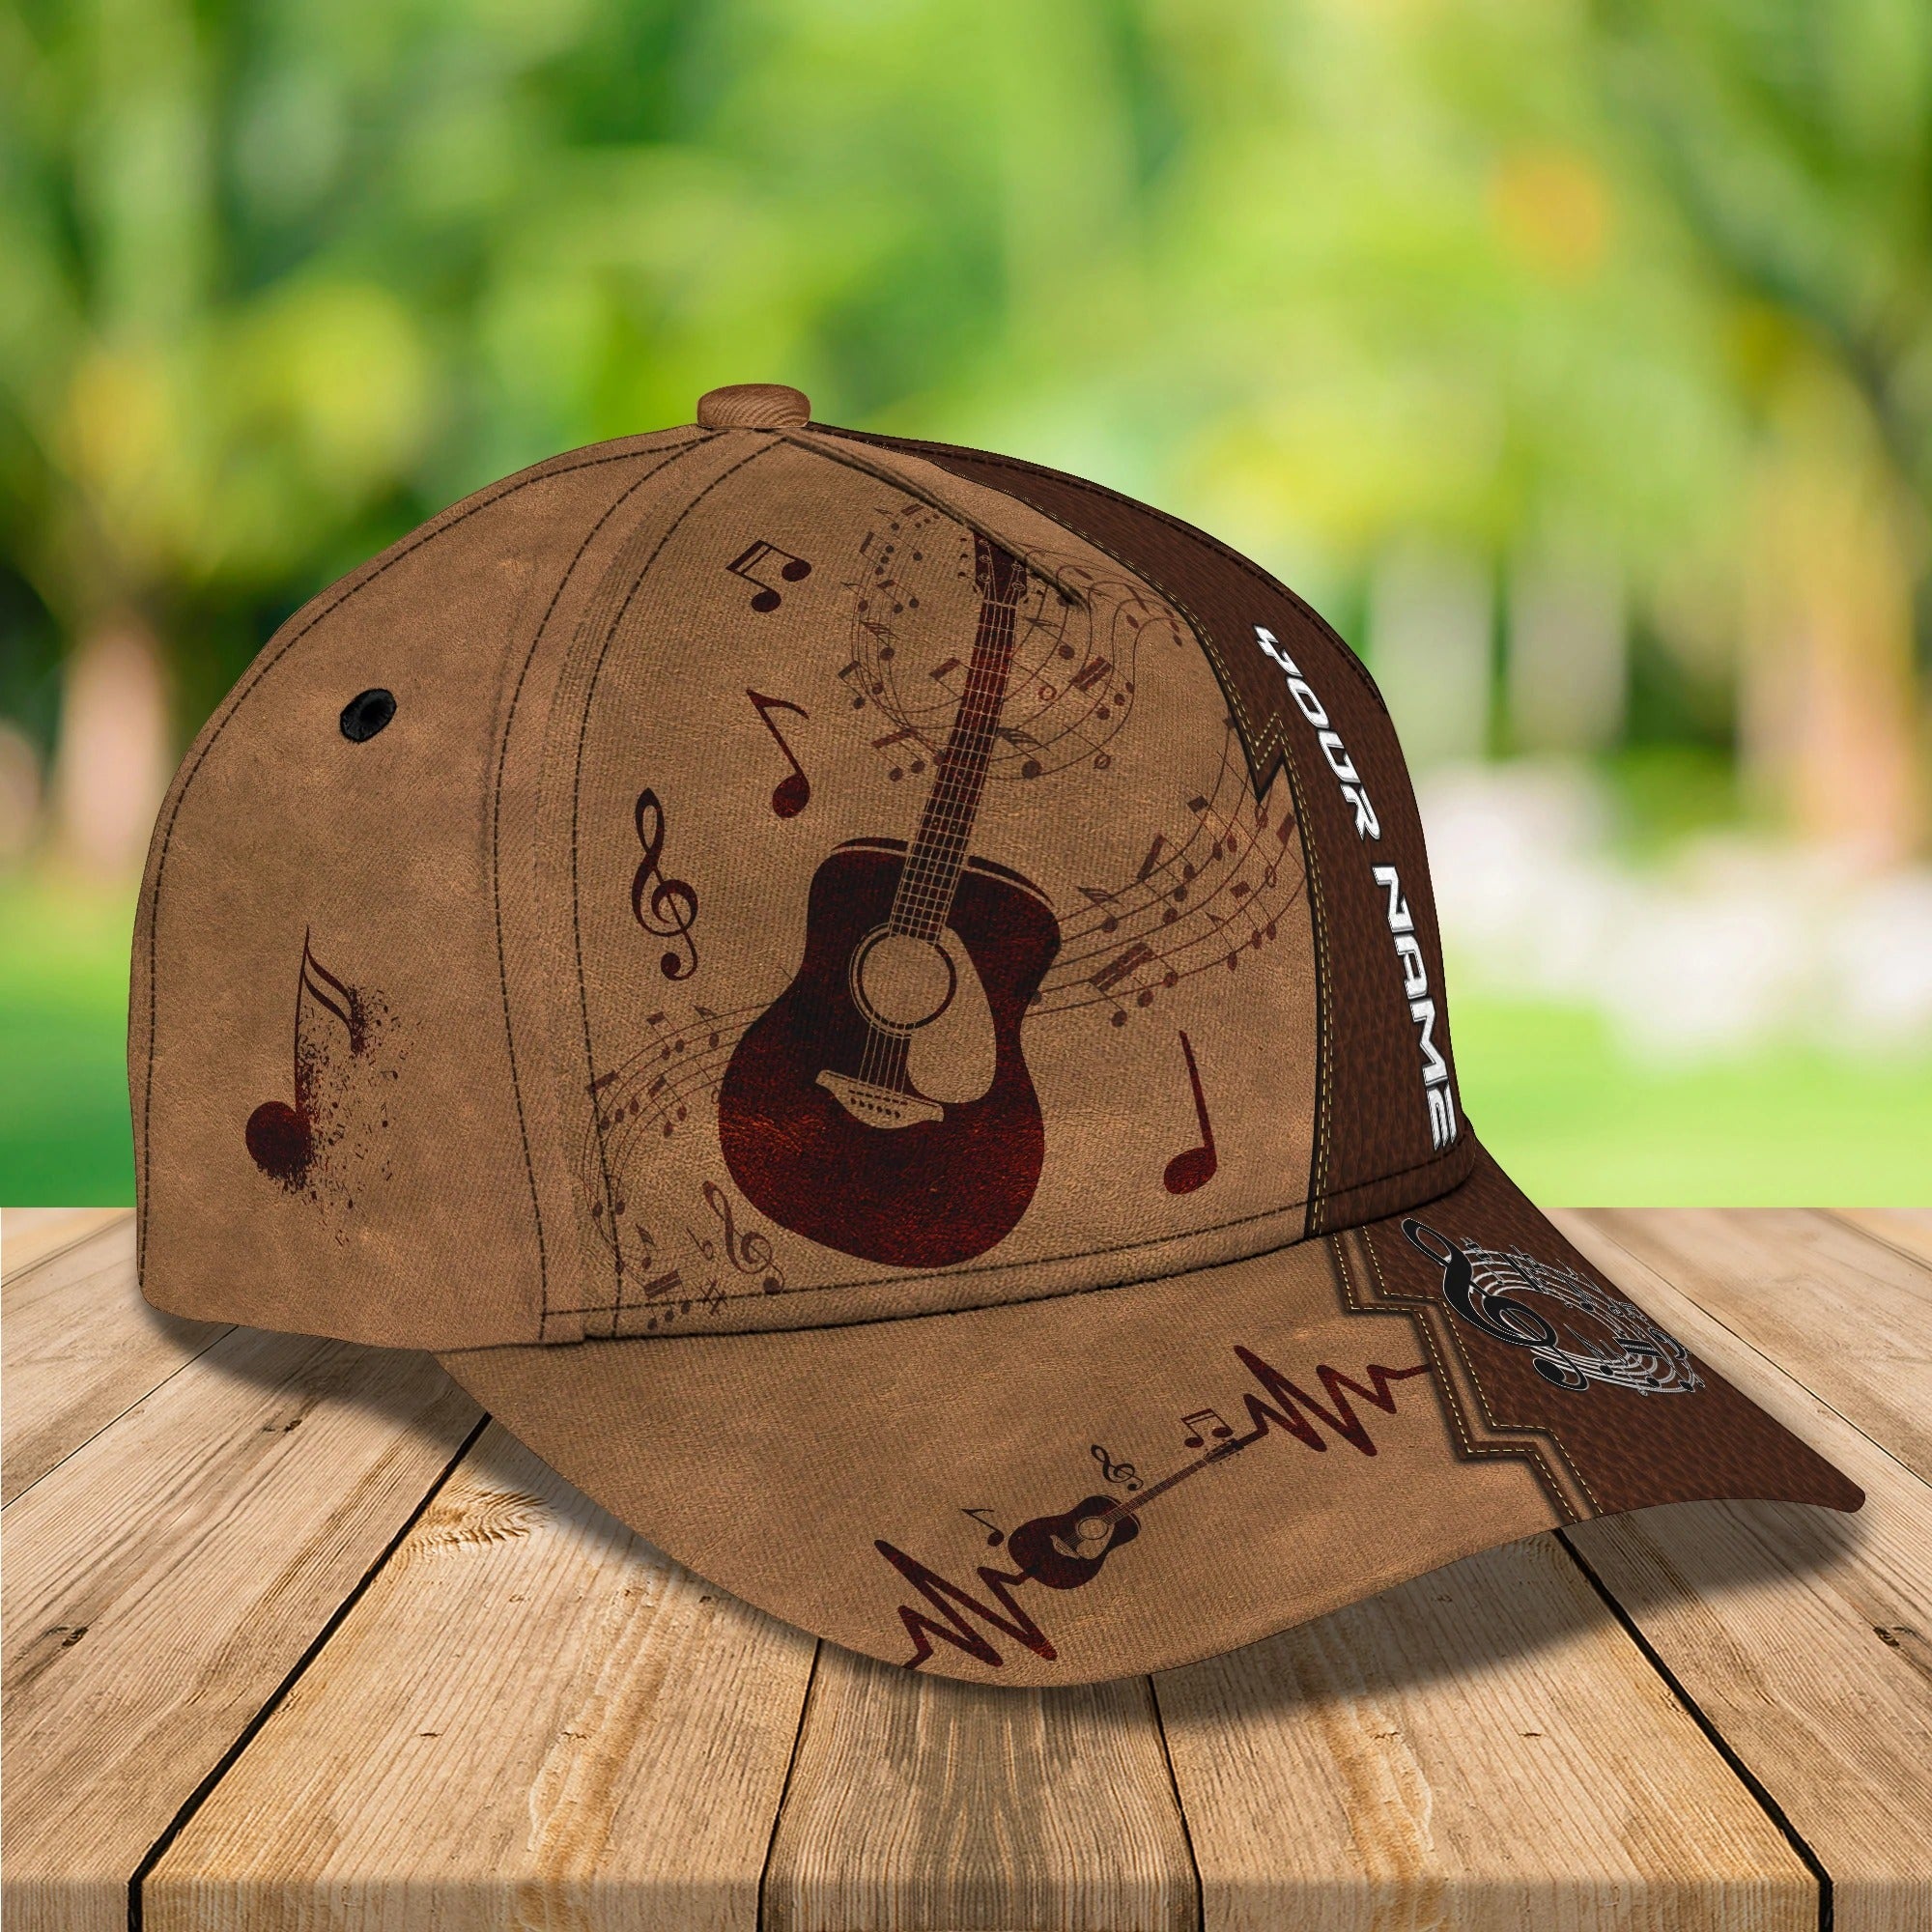 Baseball Guitar Cap Hat For Travel Summer/ Guitar Cap Leather Brown Pattern/ Best Gift To Guitarist